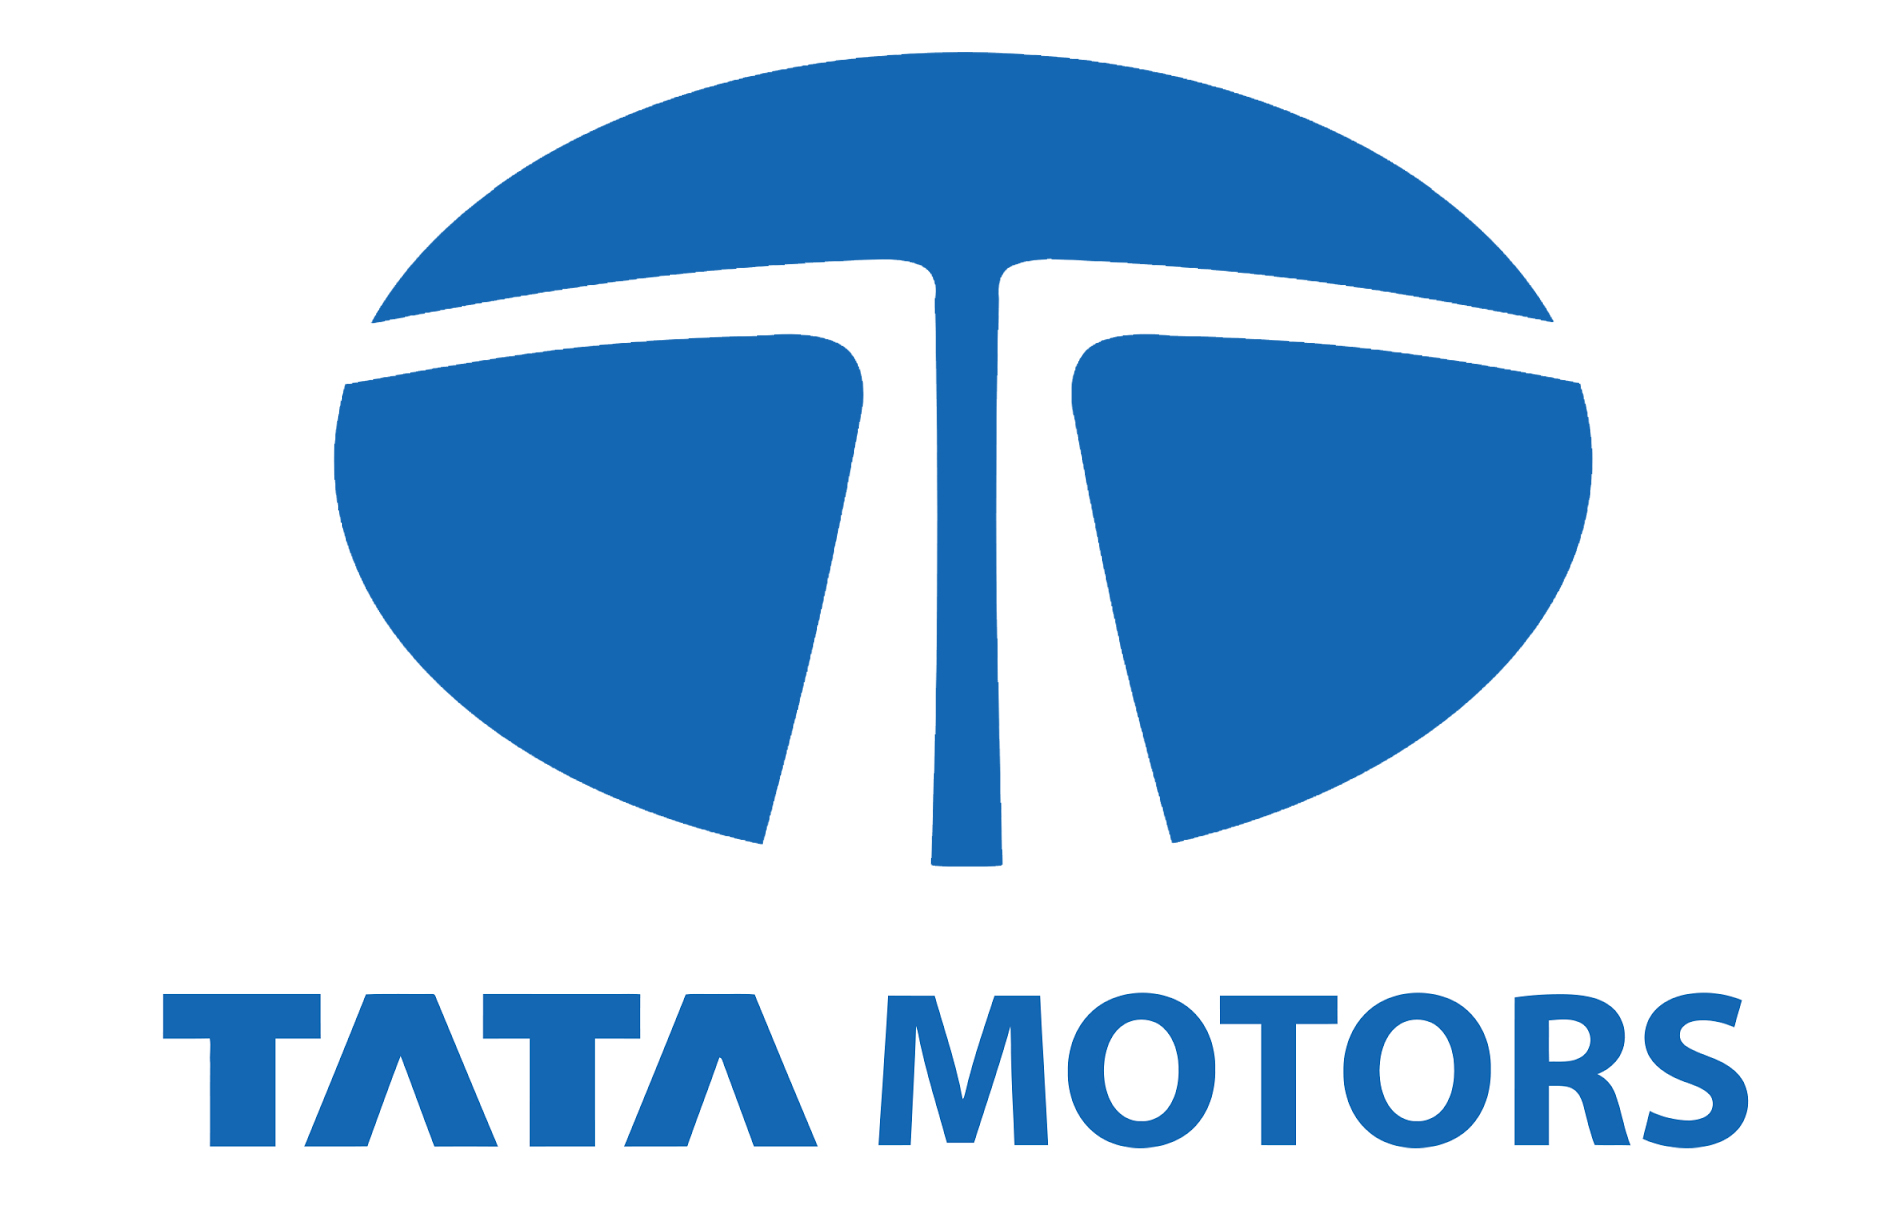 Tata Motors Cars Showroom - Max Motors - Logo